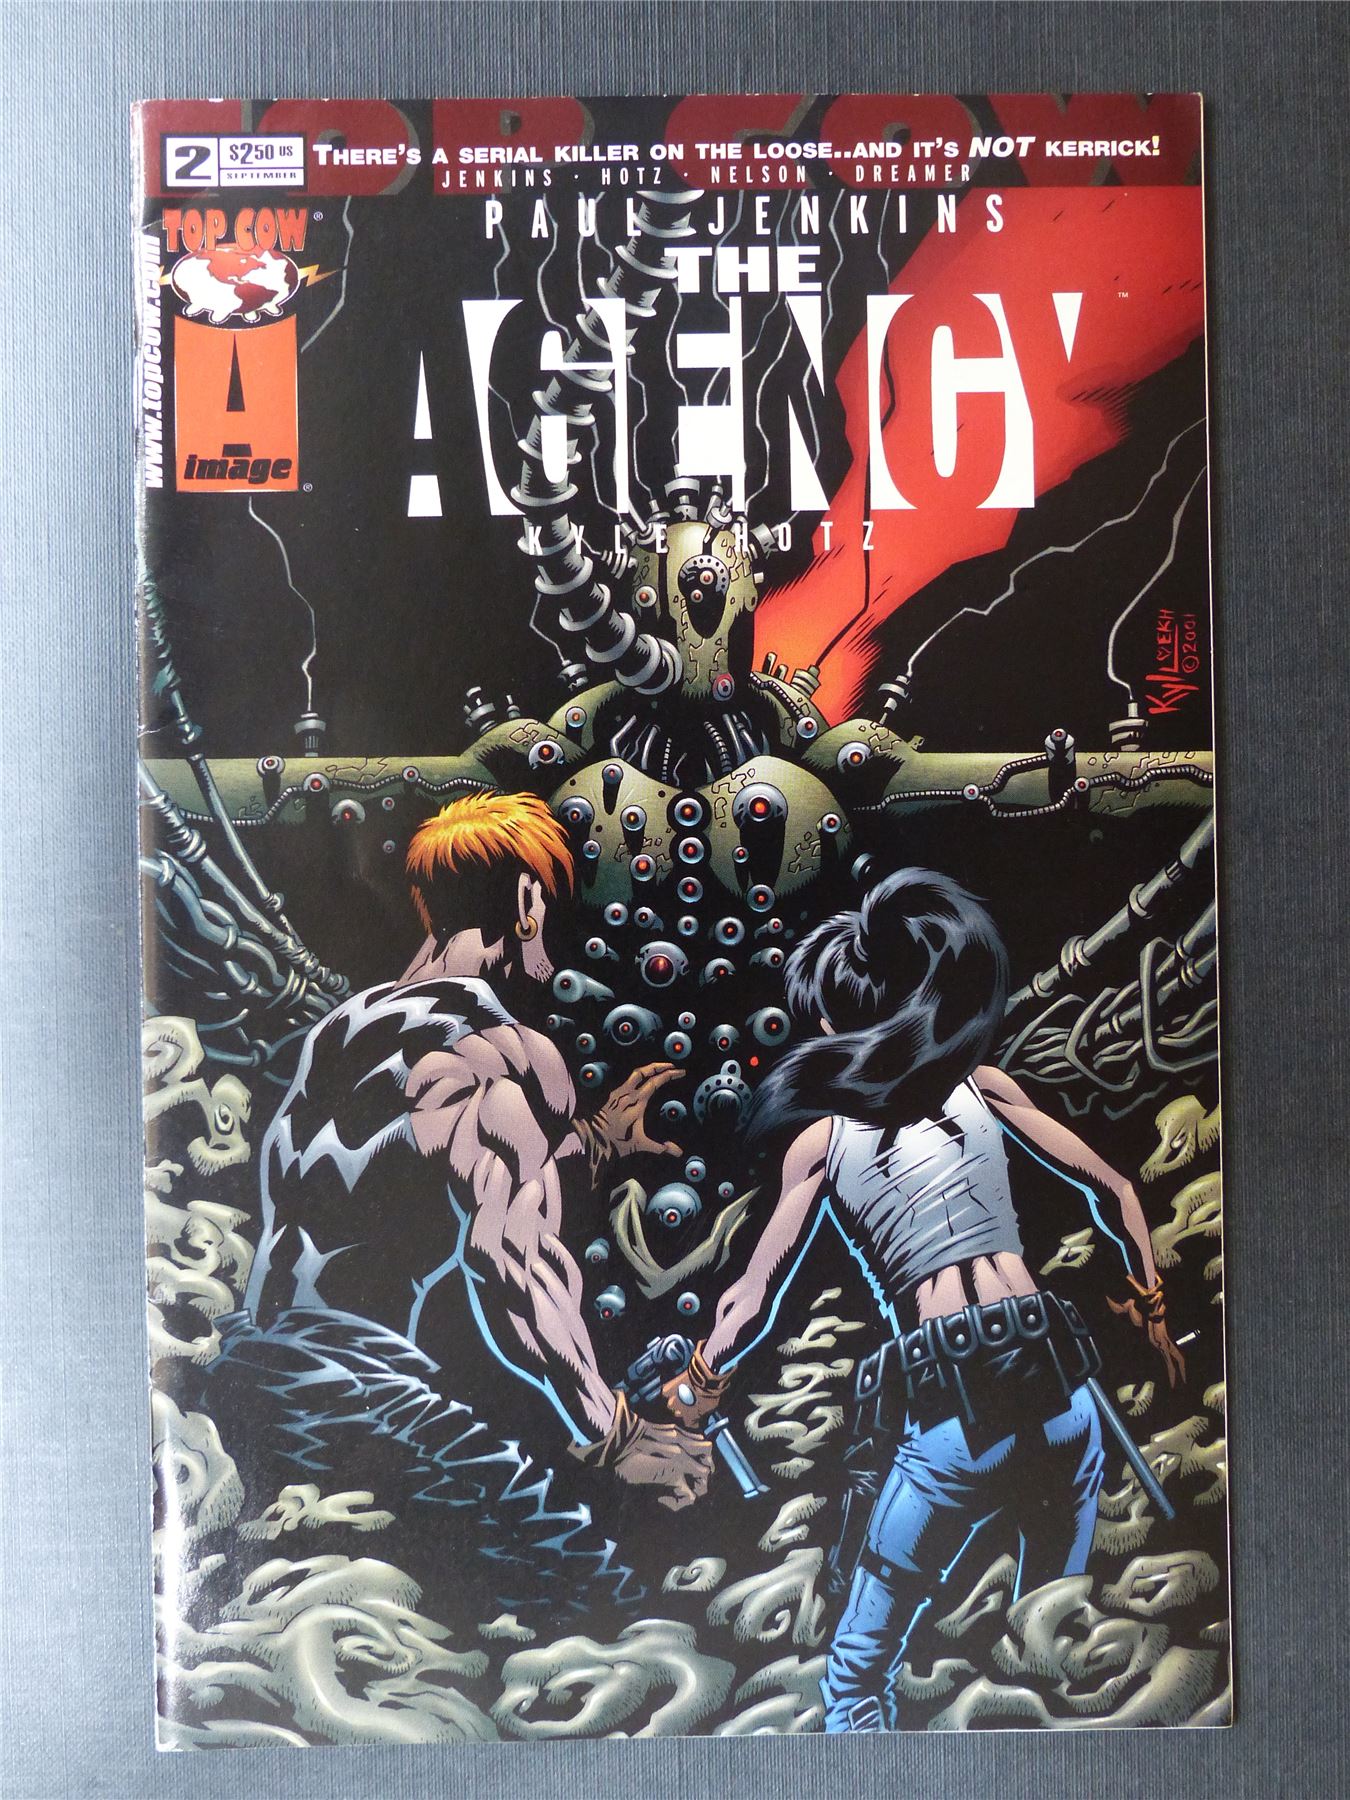 The AGENCY #2 - Image Comics #1Z4